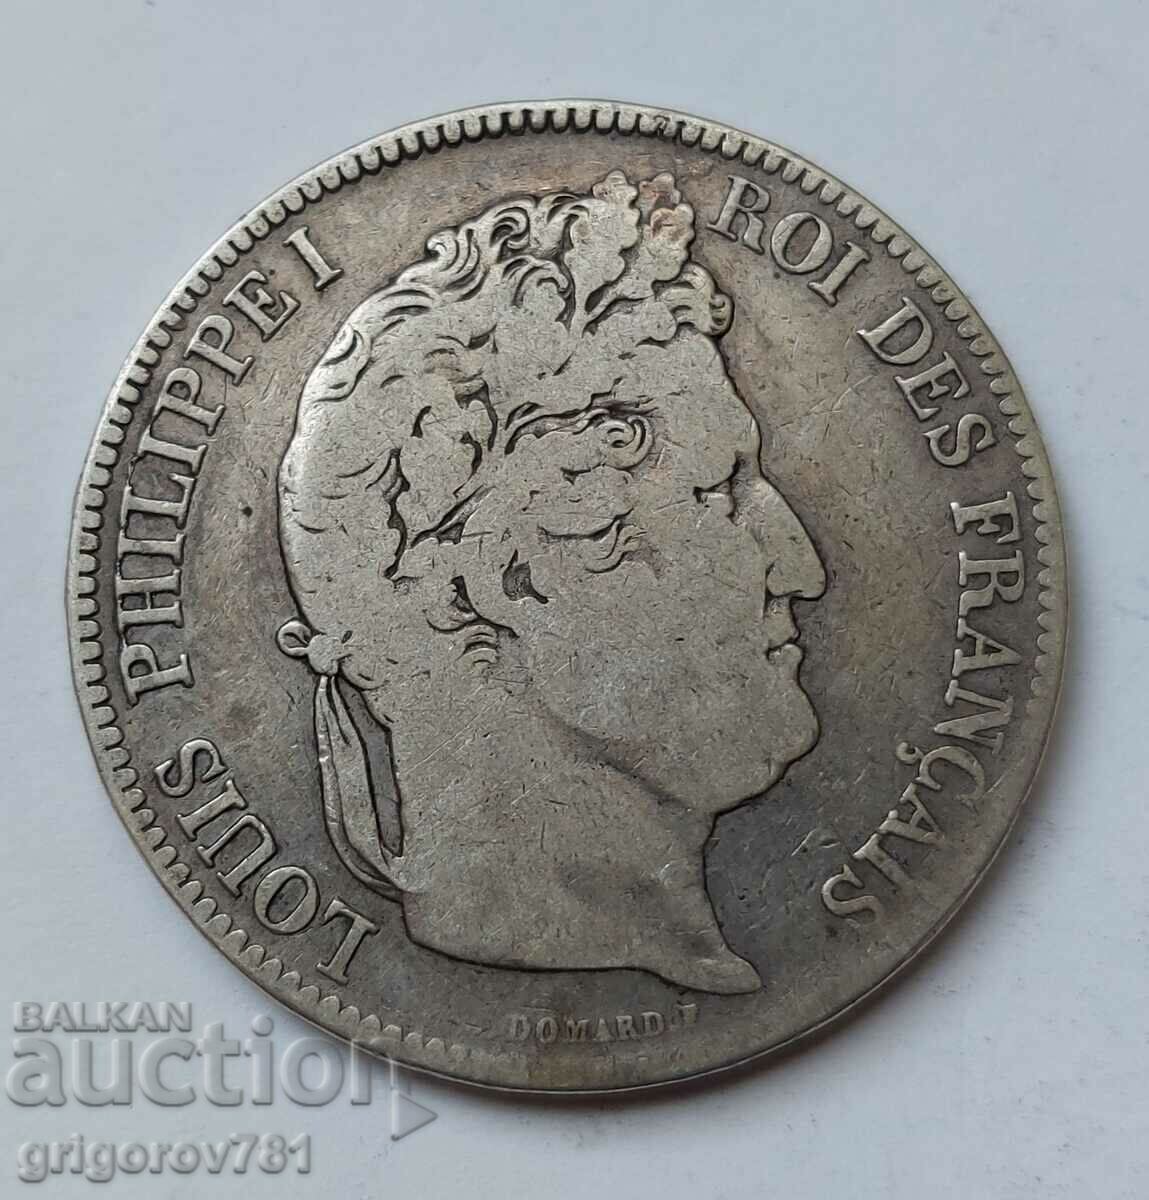 5 Francs Silver France 1834 A - Silver Coin #245